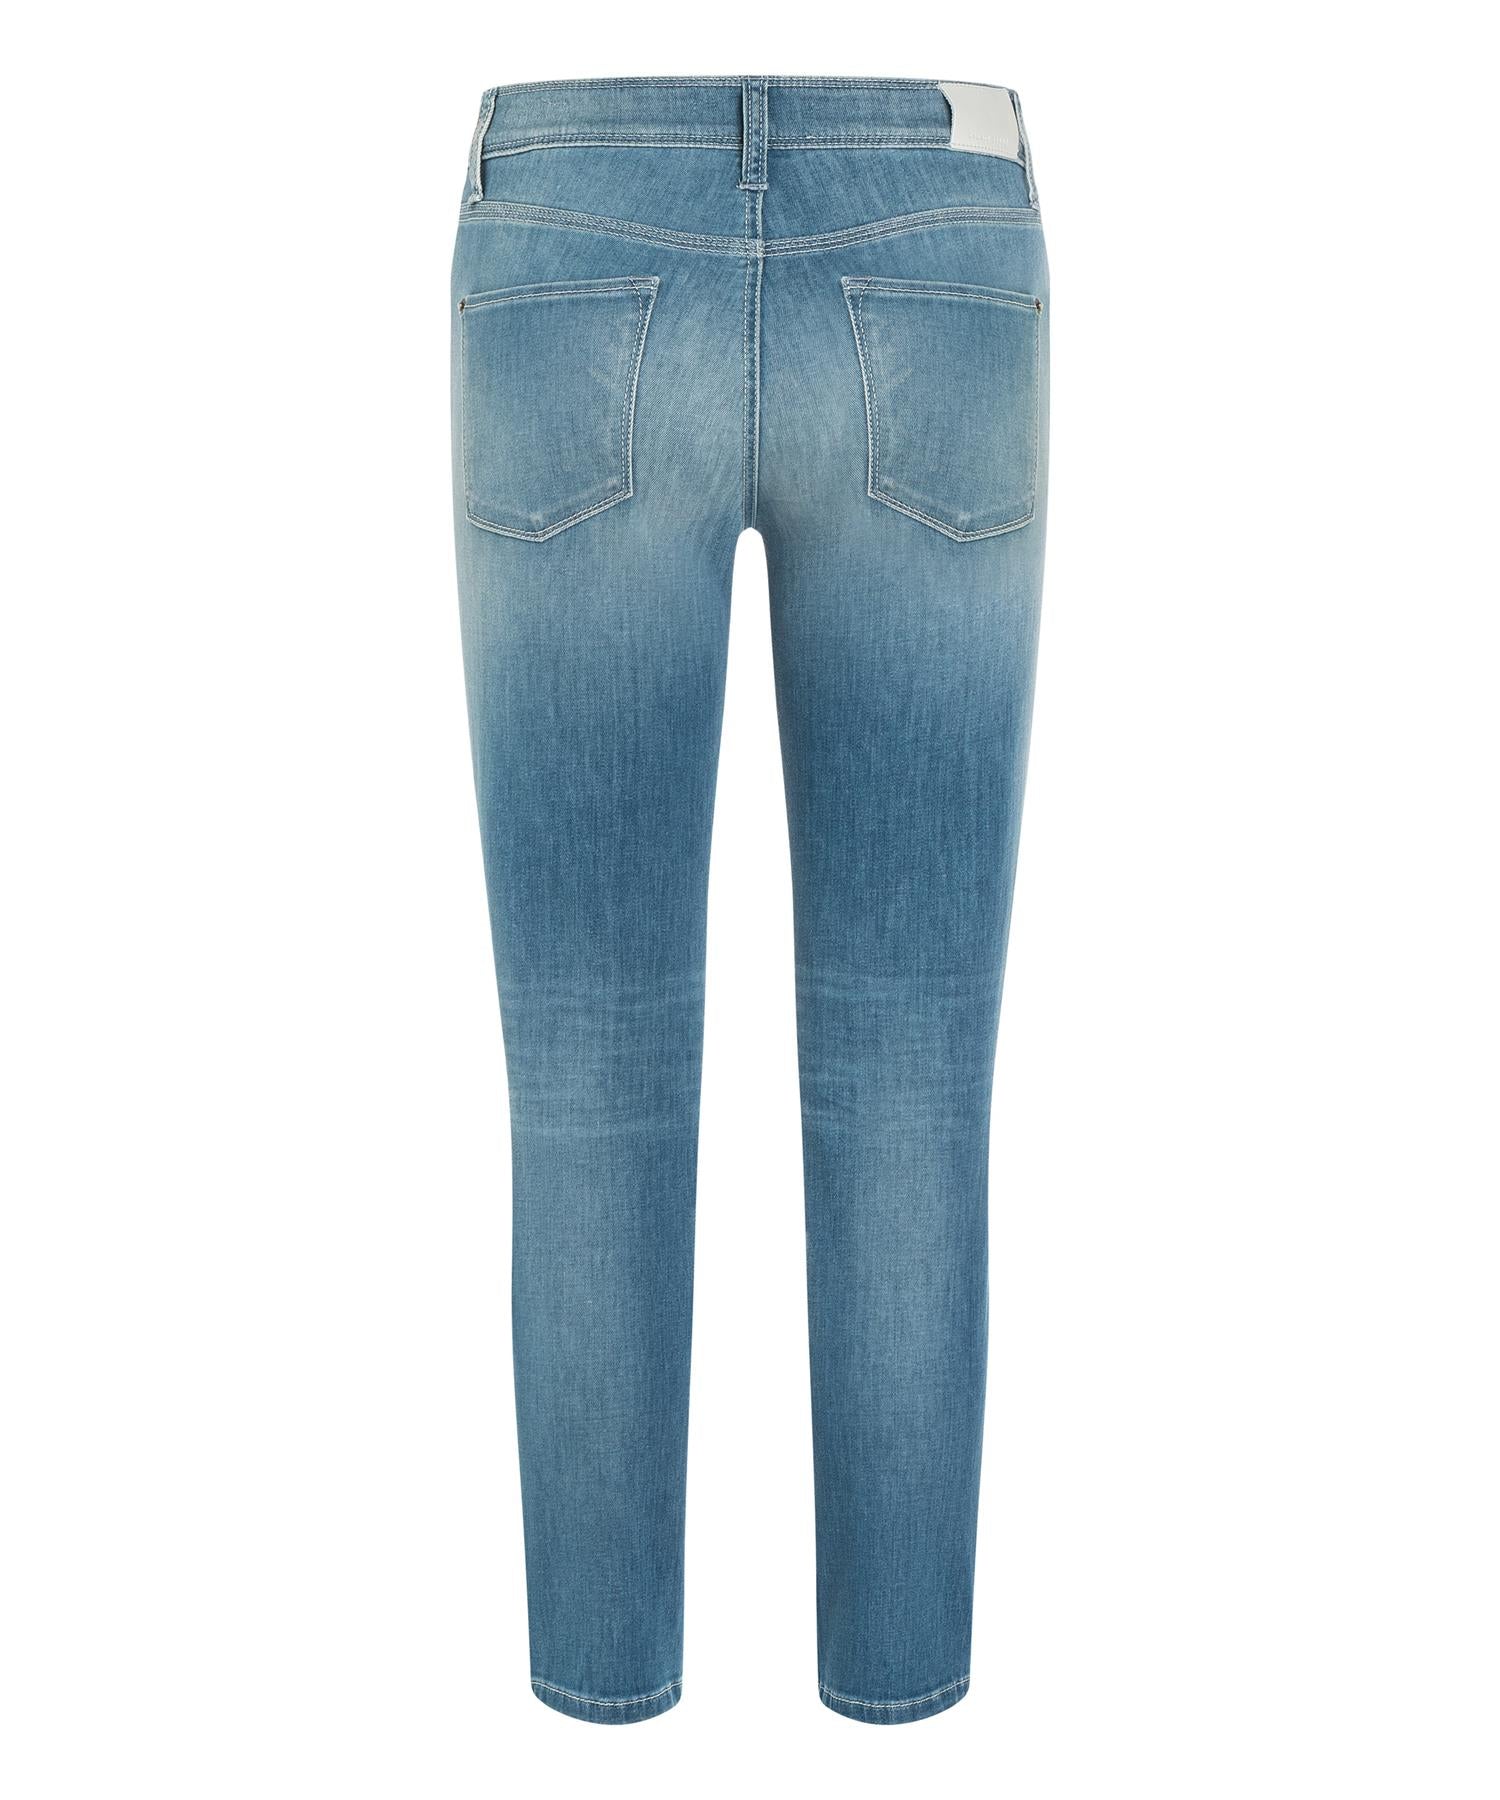 Cambio Piper short jeans medium 3d used